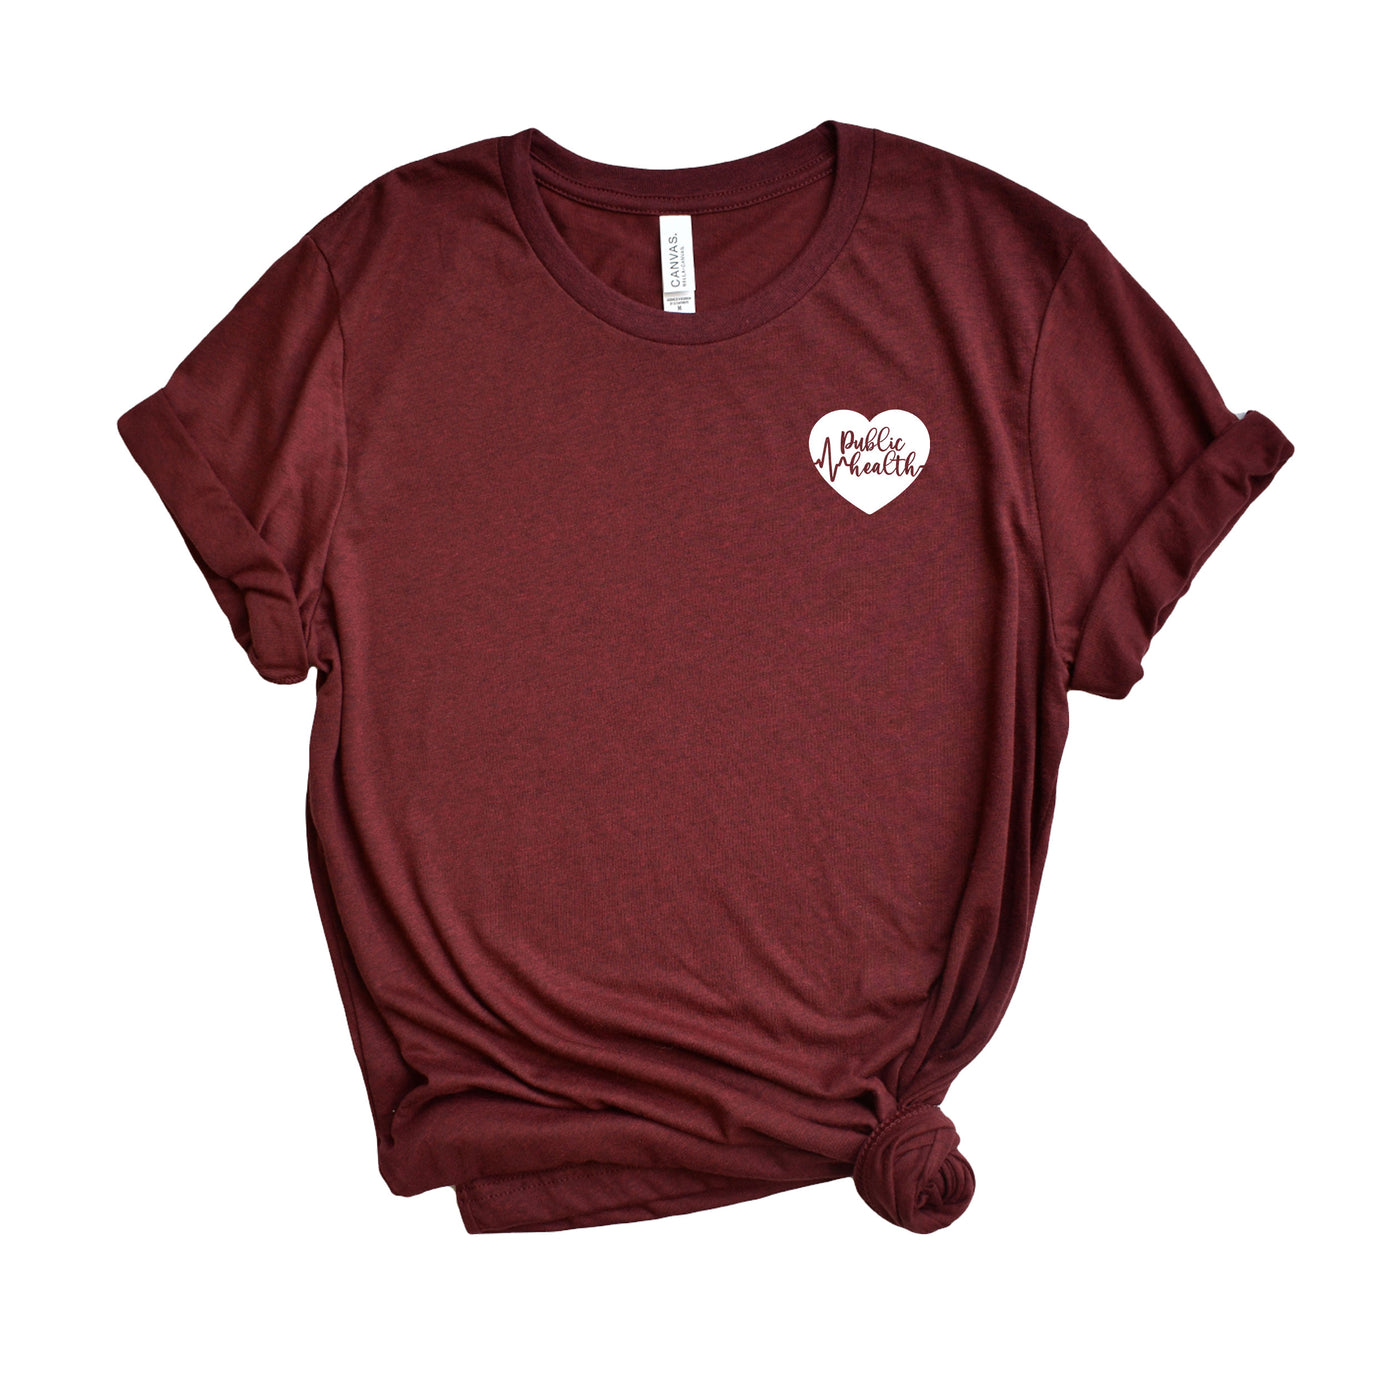 Public Health ECG Heart - Shirt